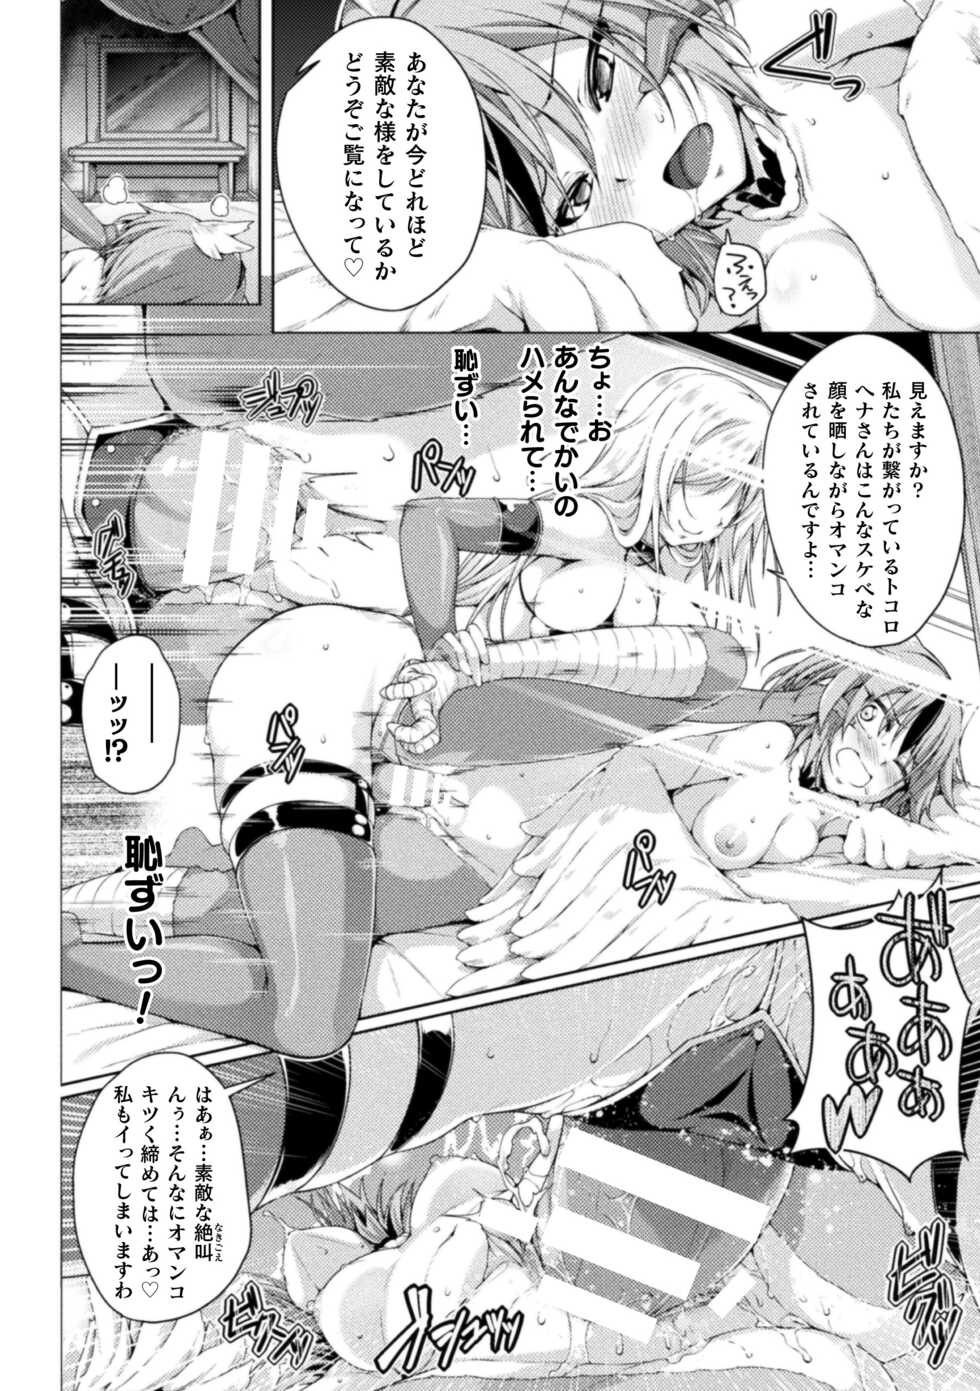 [Anthology] 2D Comic Magazine Ishukan Yuri Ecchi Vol. 2 - Page 20